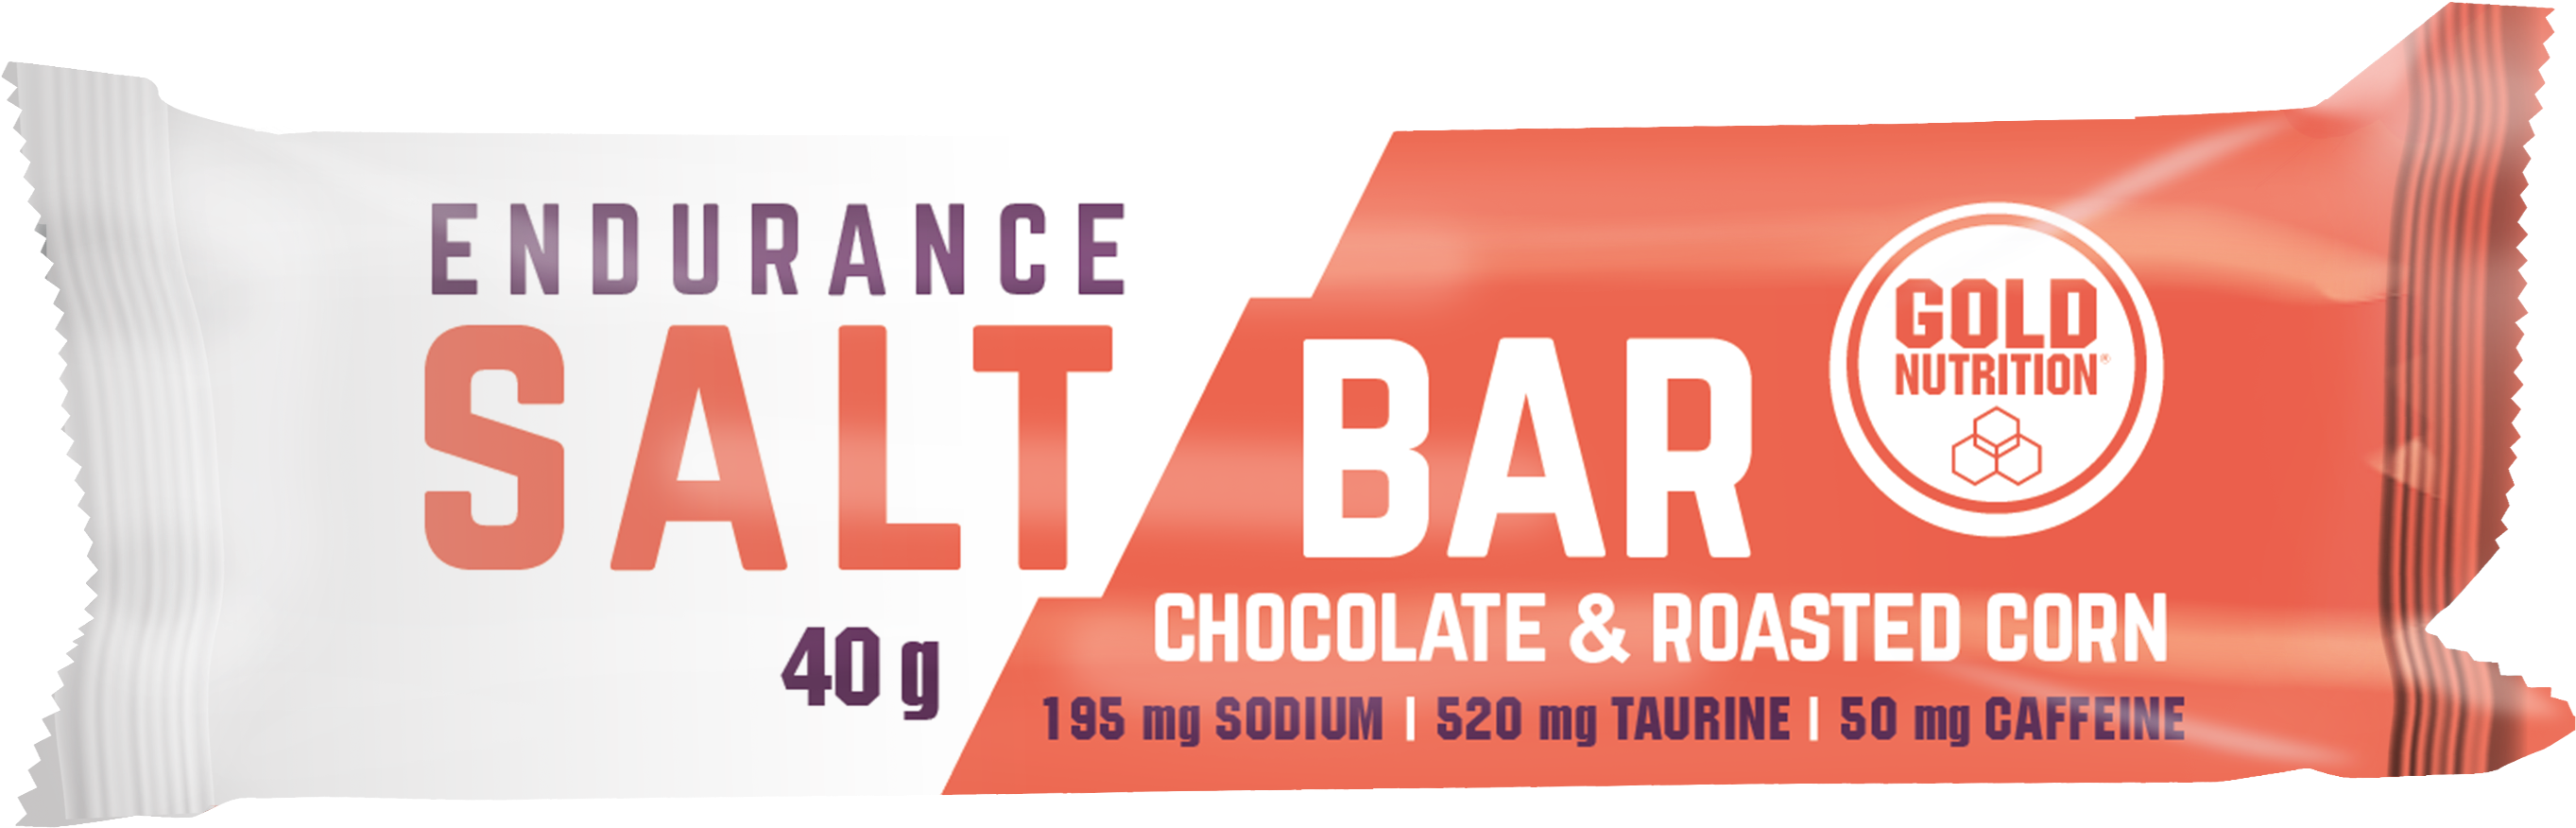 Endurance Salt Bar Goldnutrition® Choco & Roasted Corn (3187x1287), Png Download